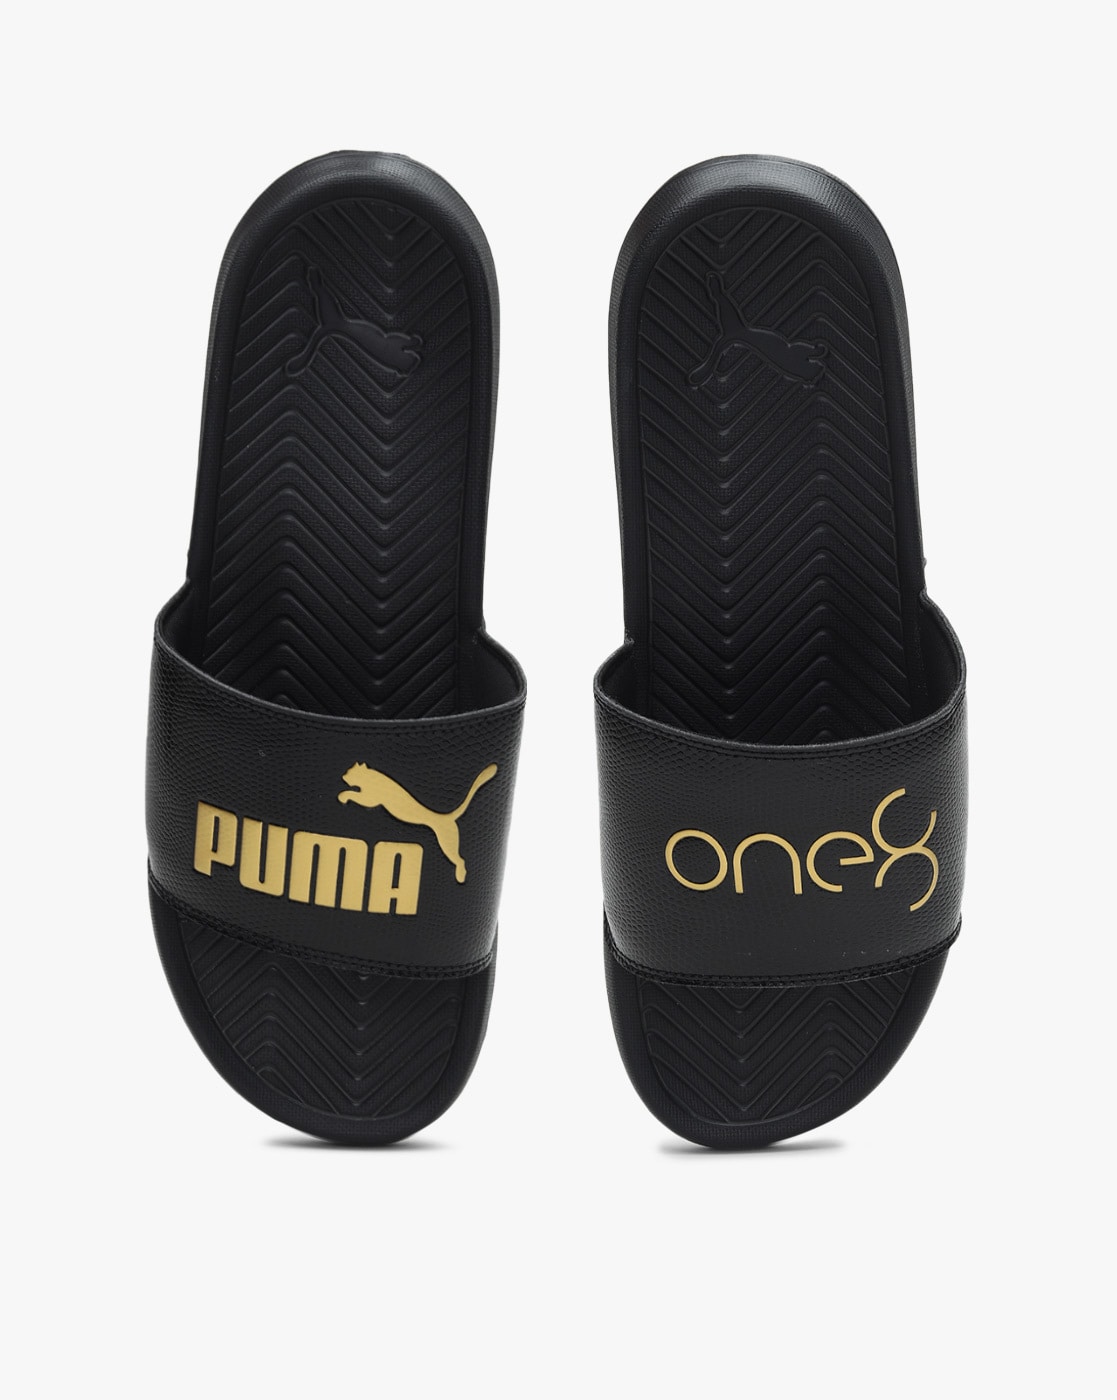 Buy Puma One8 Virat Kohli Ff Iv Idp Black Flip Flops Online-thanhphatduhoc.com.vn